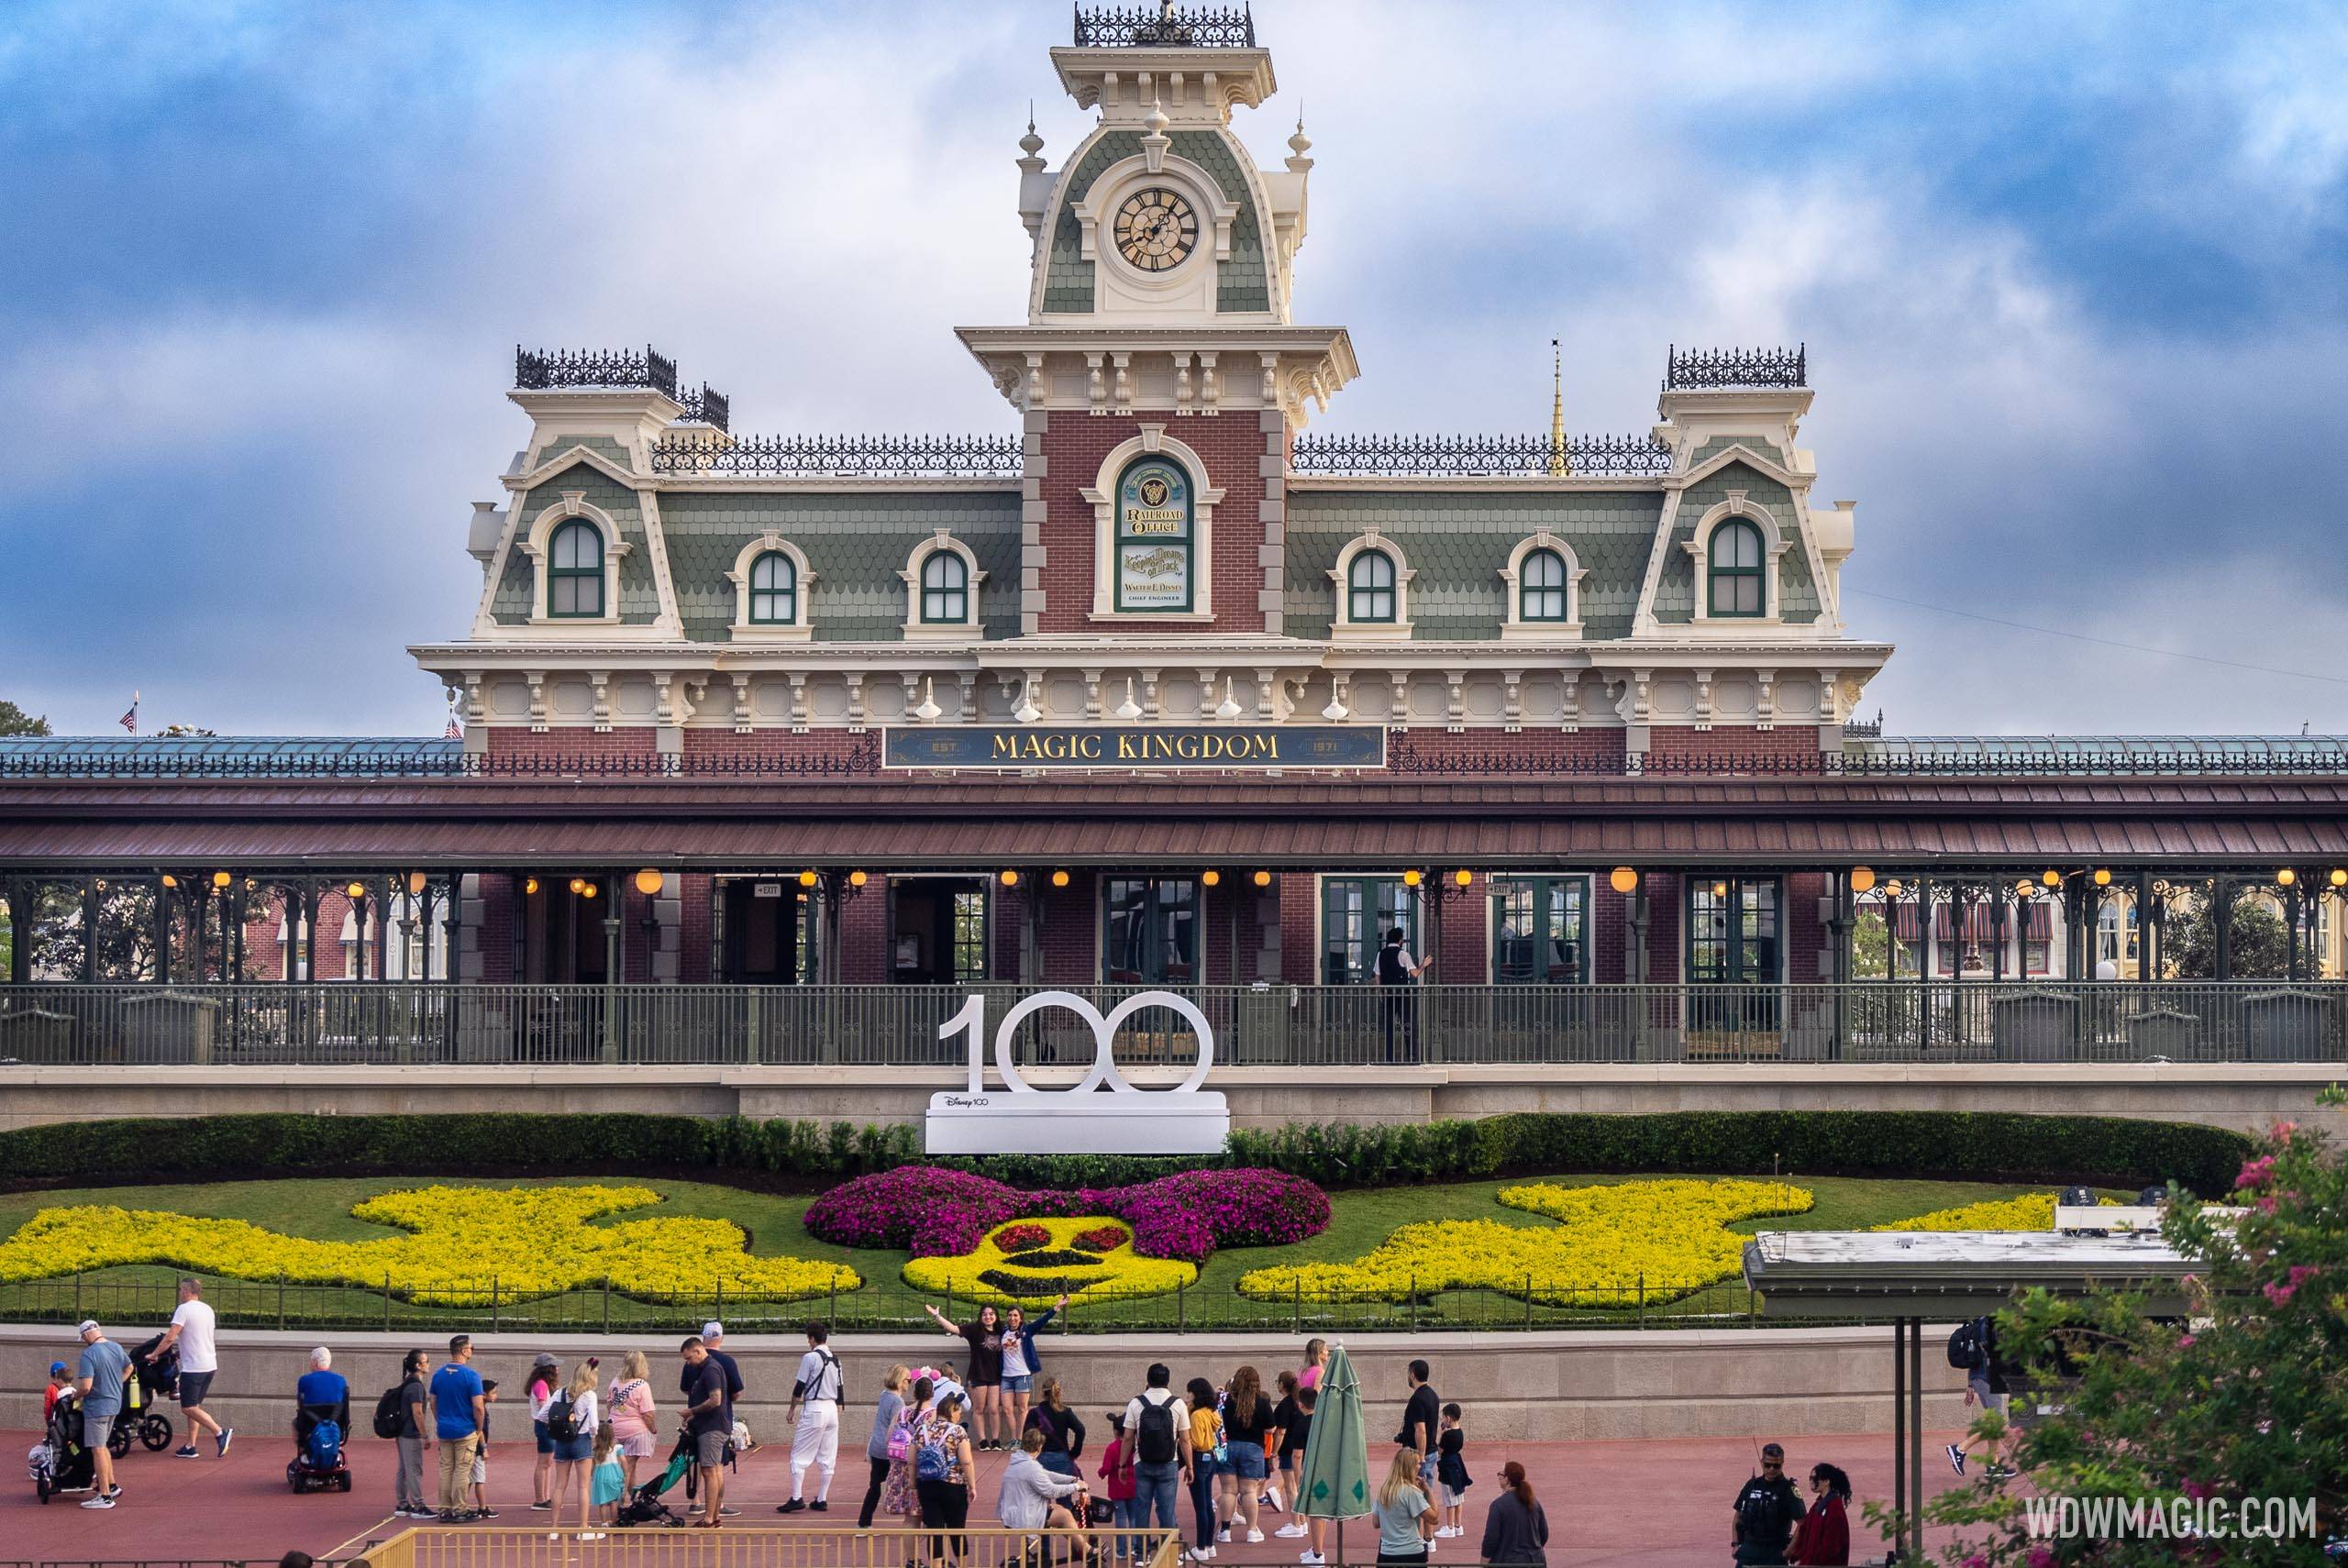 Disney100 decor arrives at Magic Kingdom as part of Disney's 100th